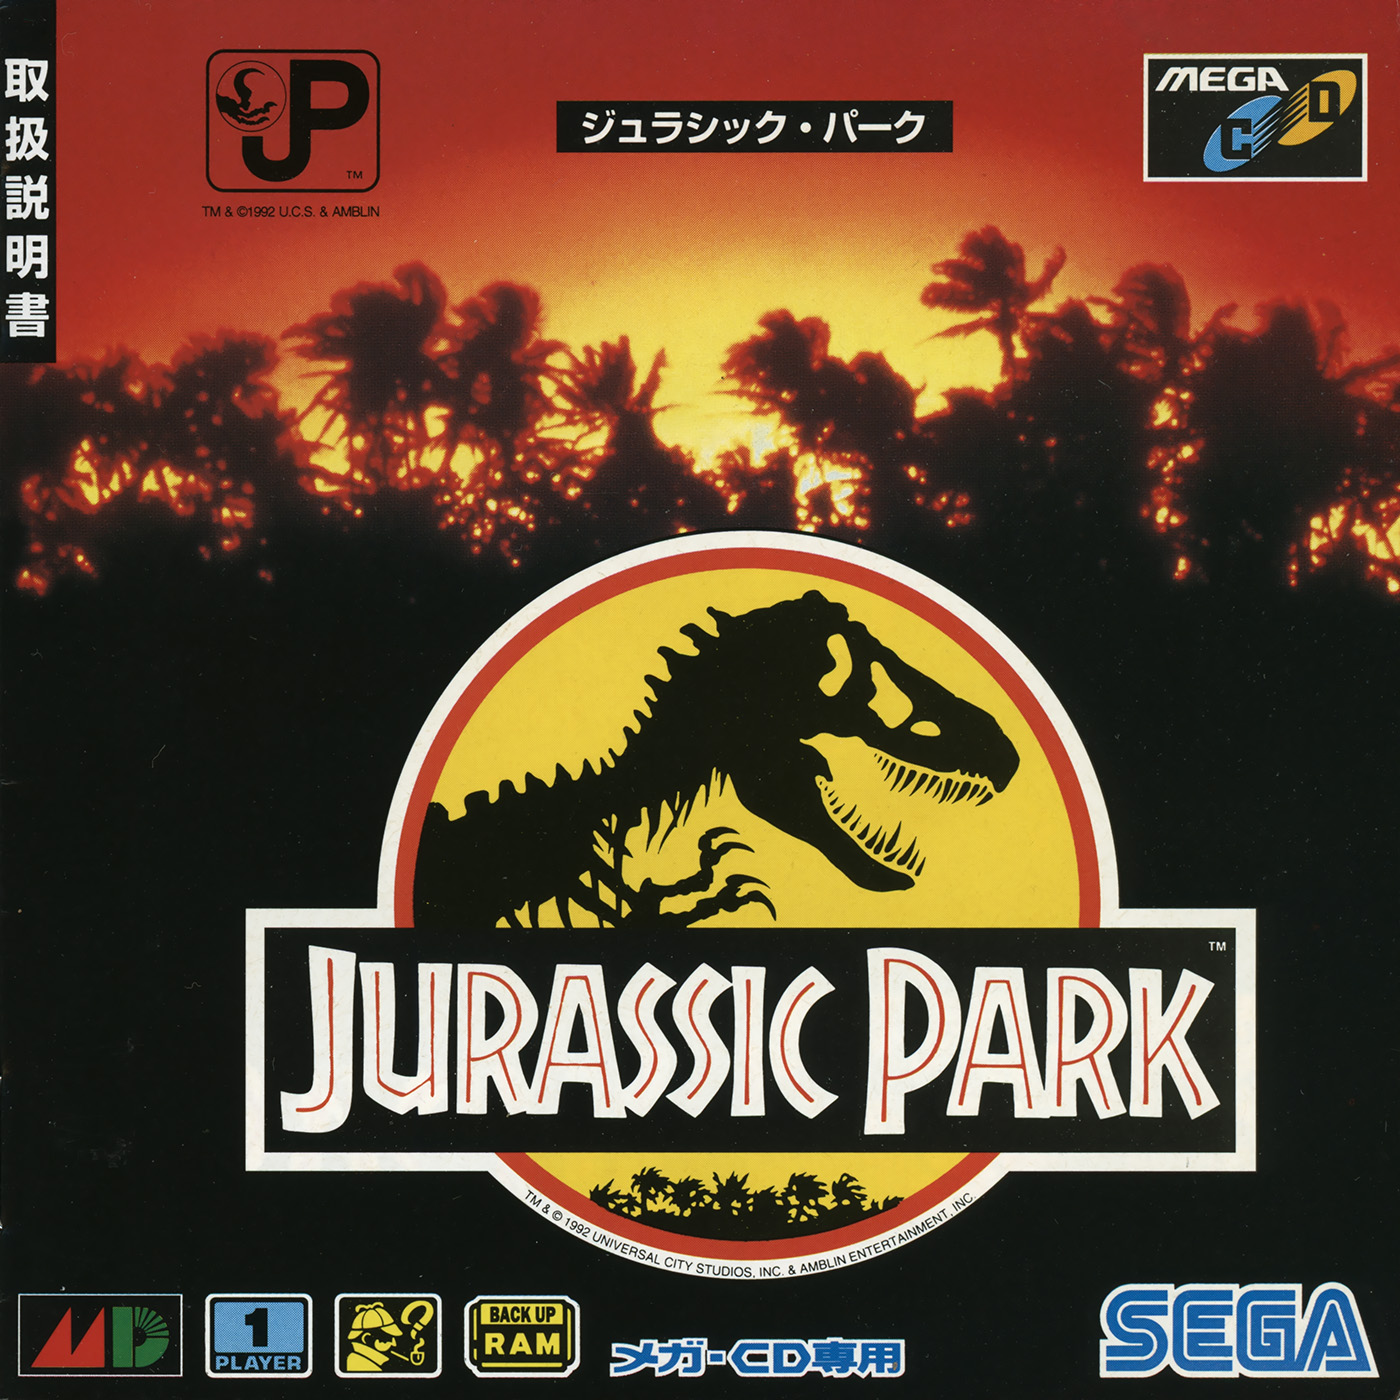 Игра сега парк юрского. Юрасик парк сега. Jurassic Park игра на сегу. Сега Jurassic Park 1. Jurassic Park 2 Sega обложка.